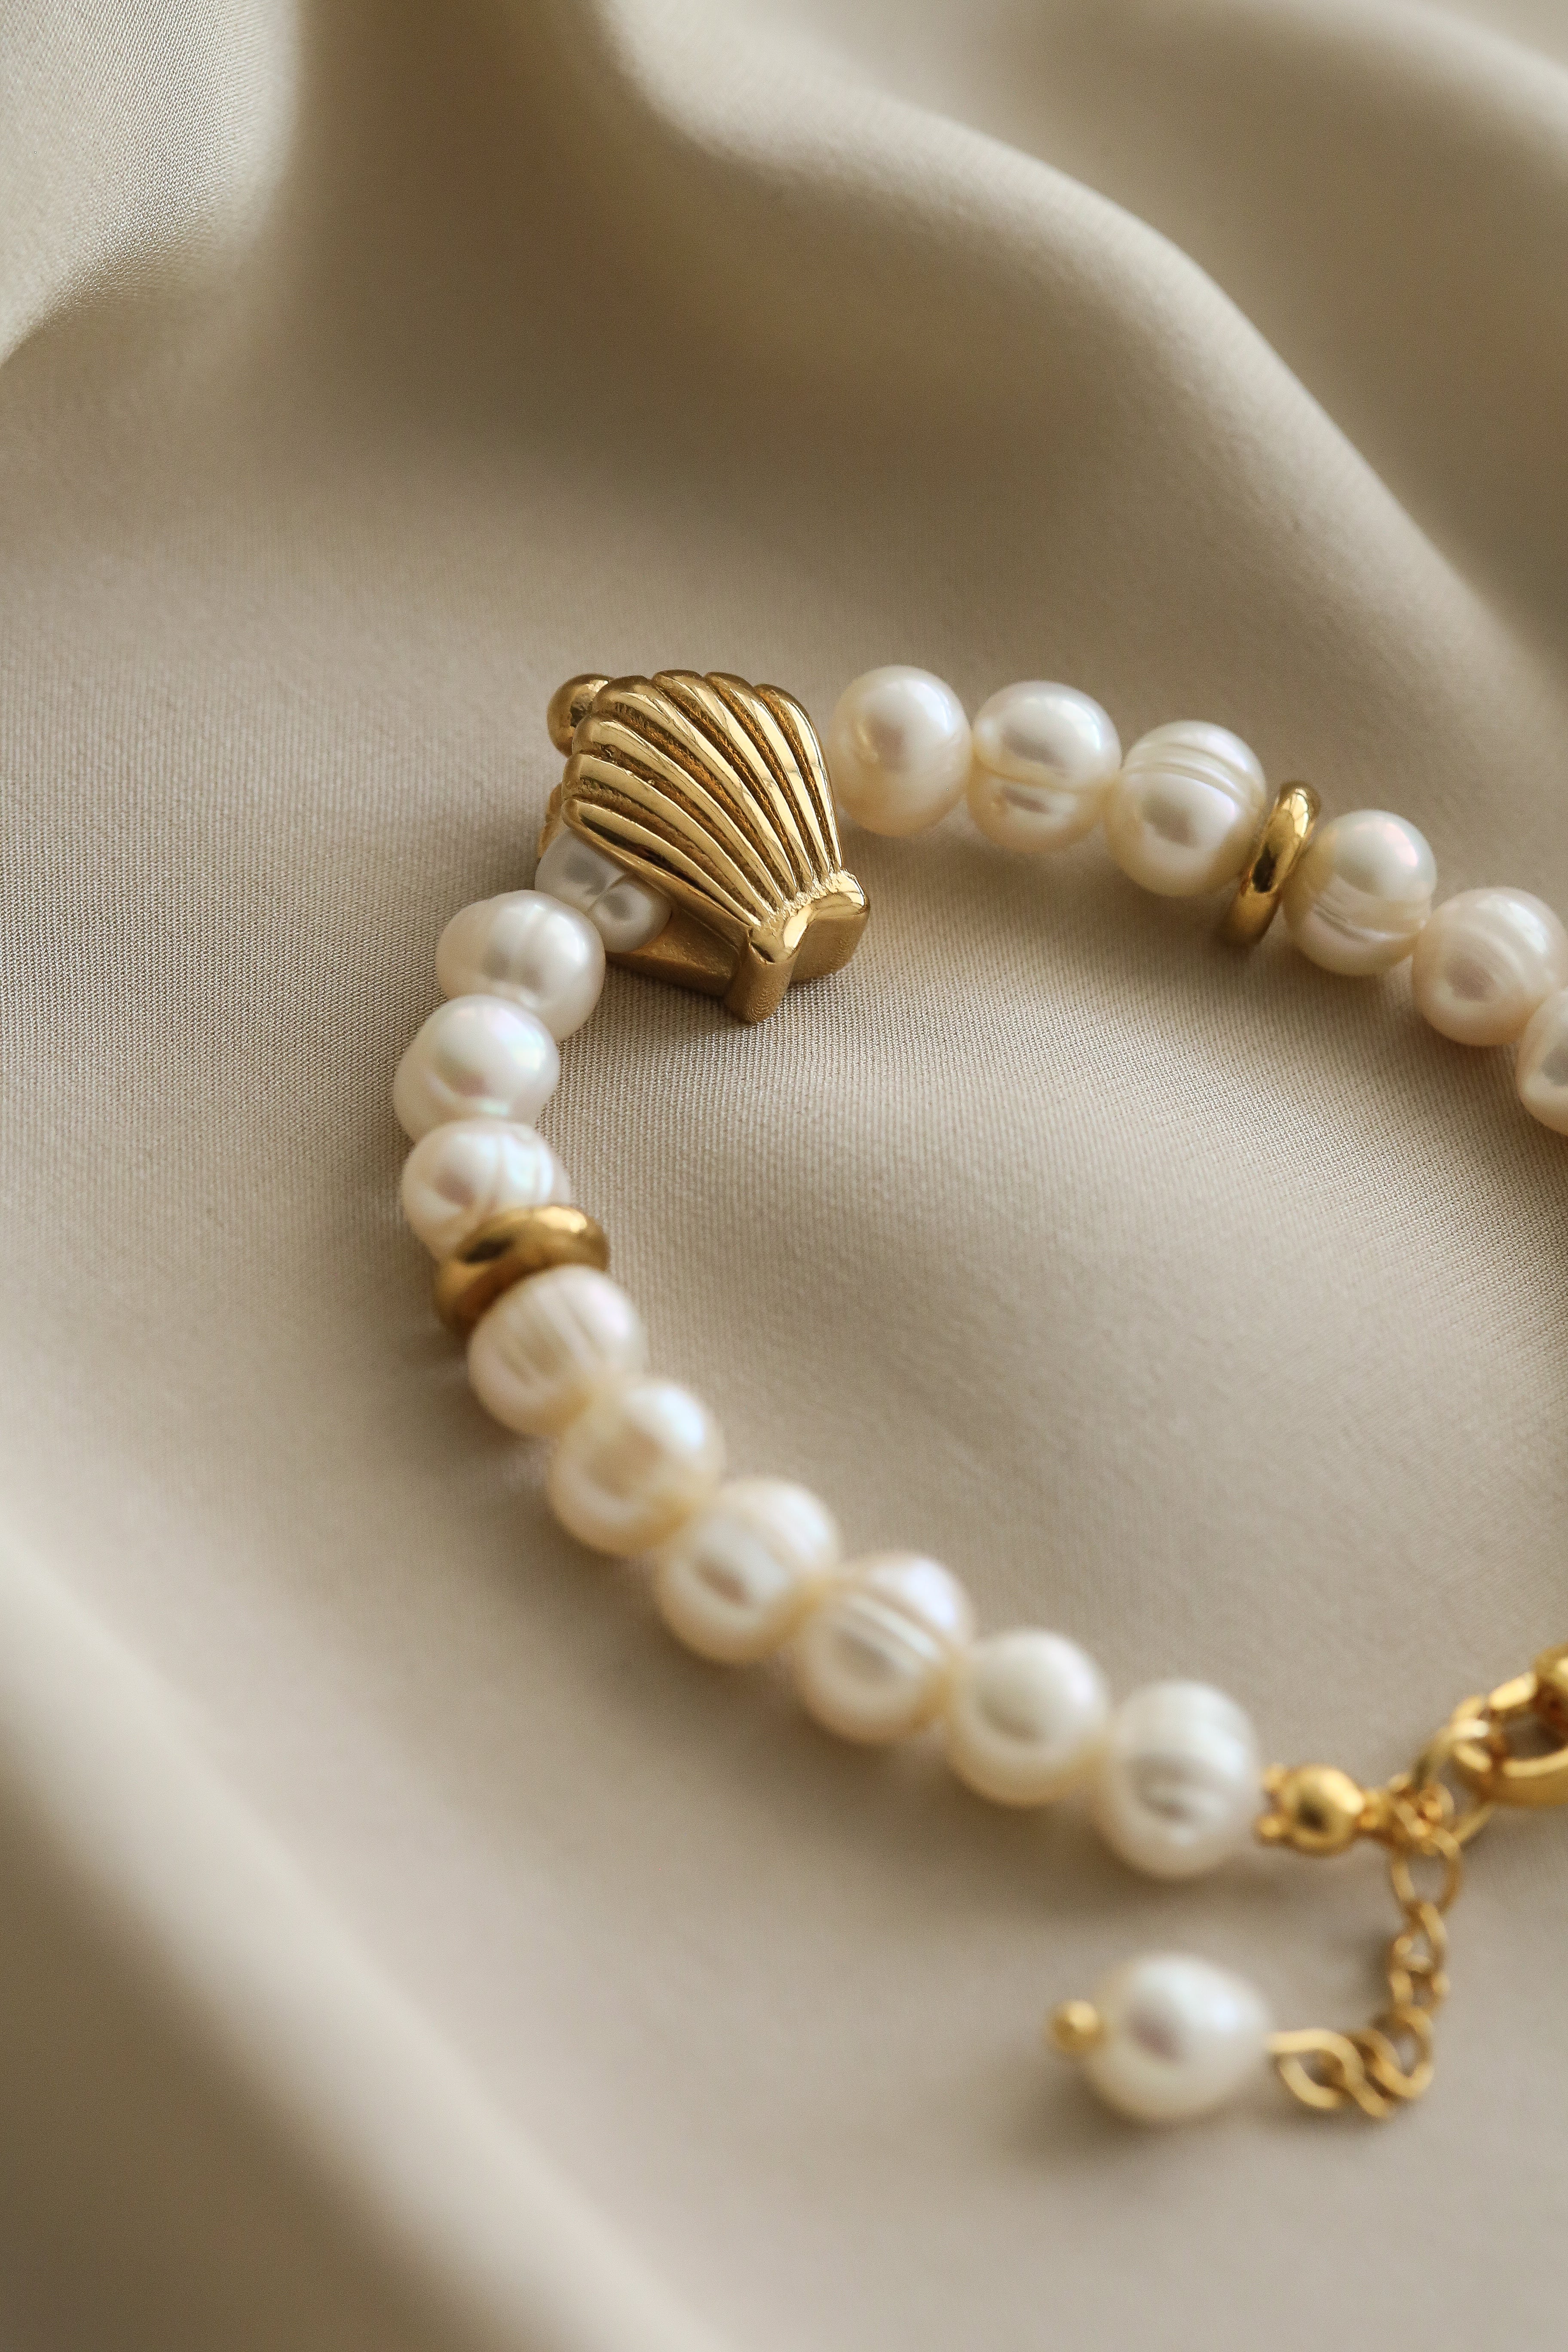 Luce Bracelet - Boutique Minimaliste has waterproof, durable, elegant and vintage inspired jewelry